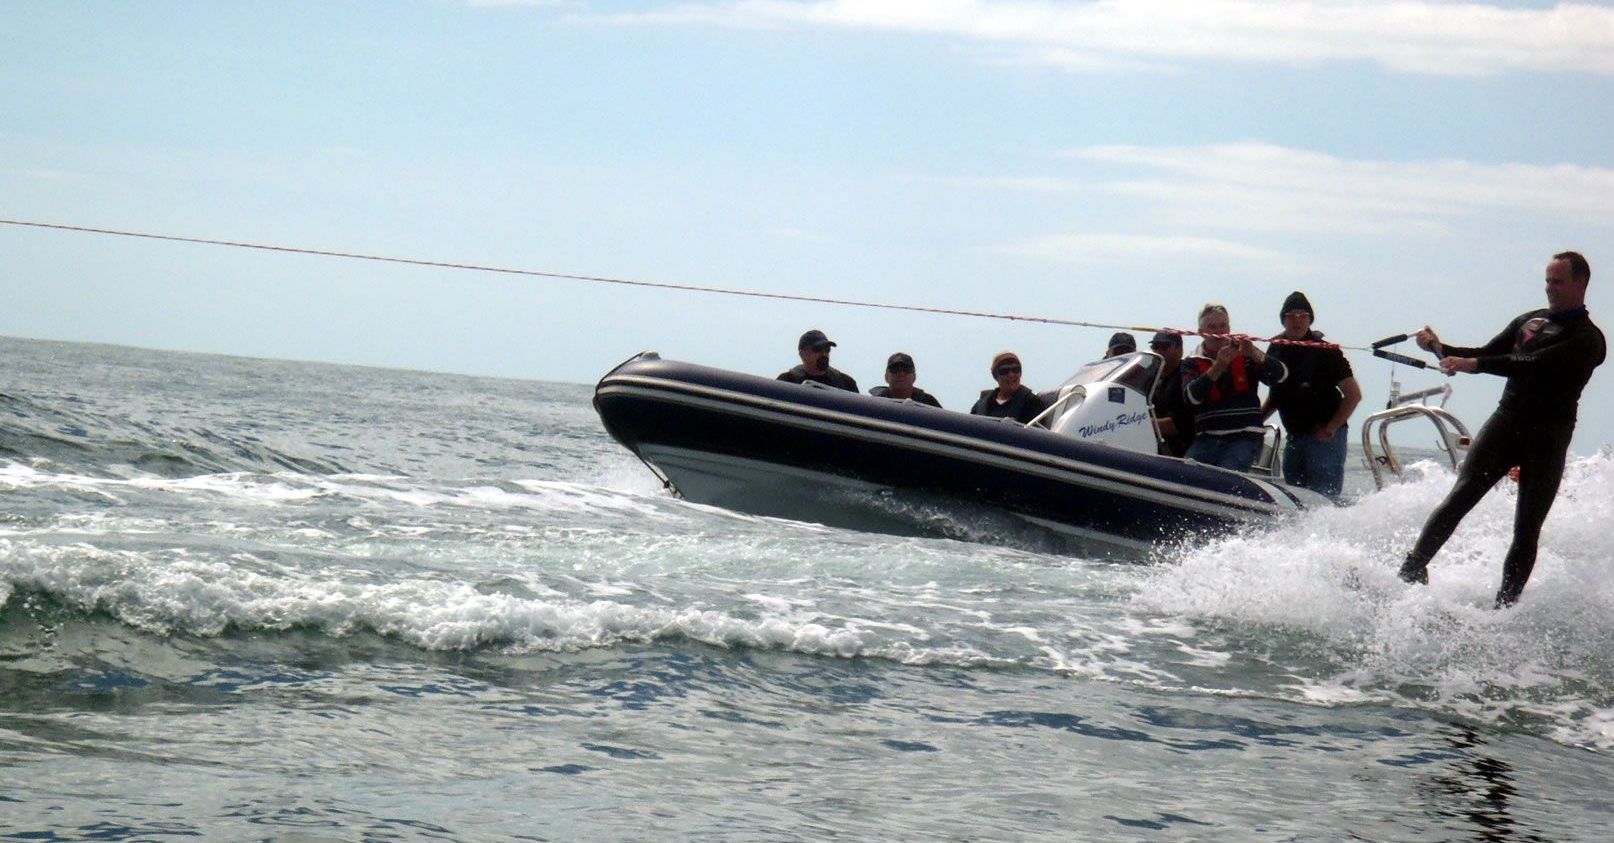 astest crossing of the Irish Sea on wakeboards: Irish cops set world record (Video)
